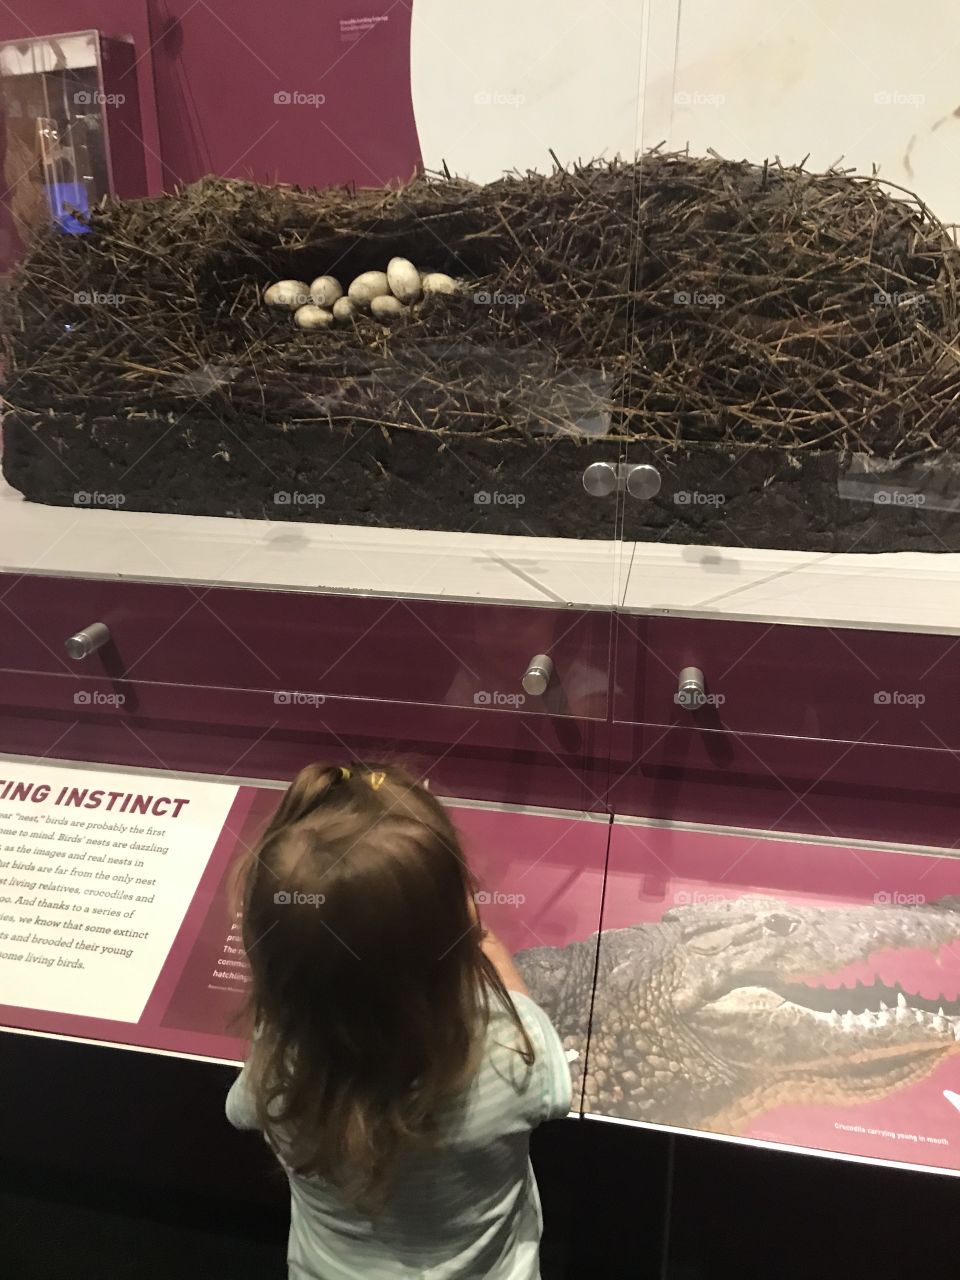 Toddler looking at dinosaur eggs at the science museum, educational fun!